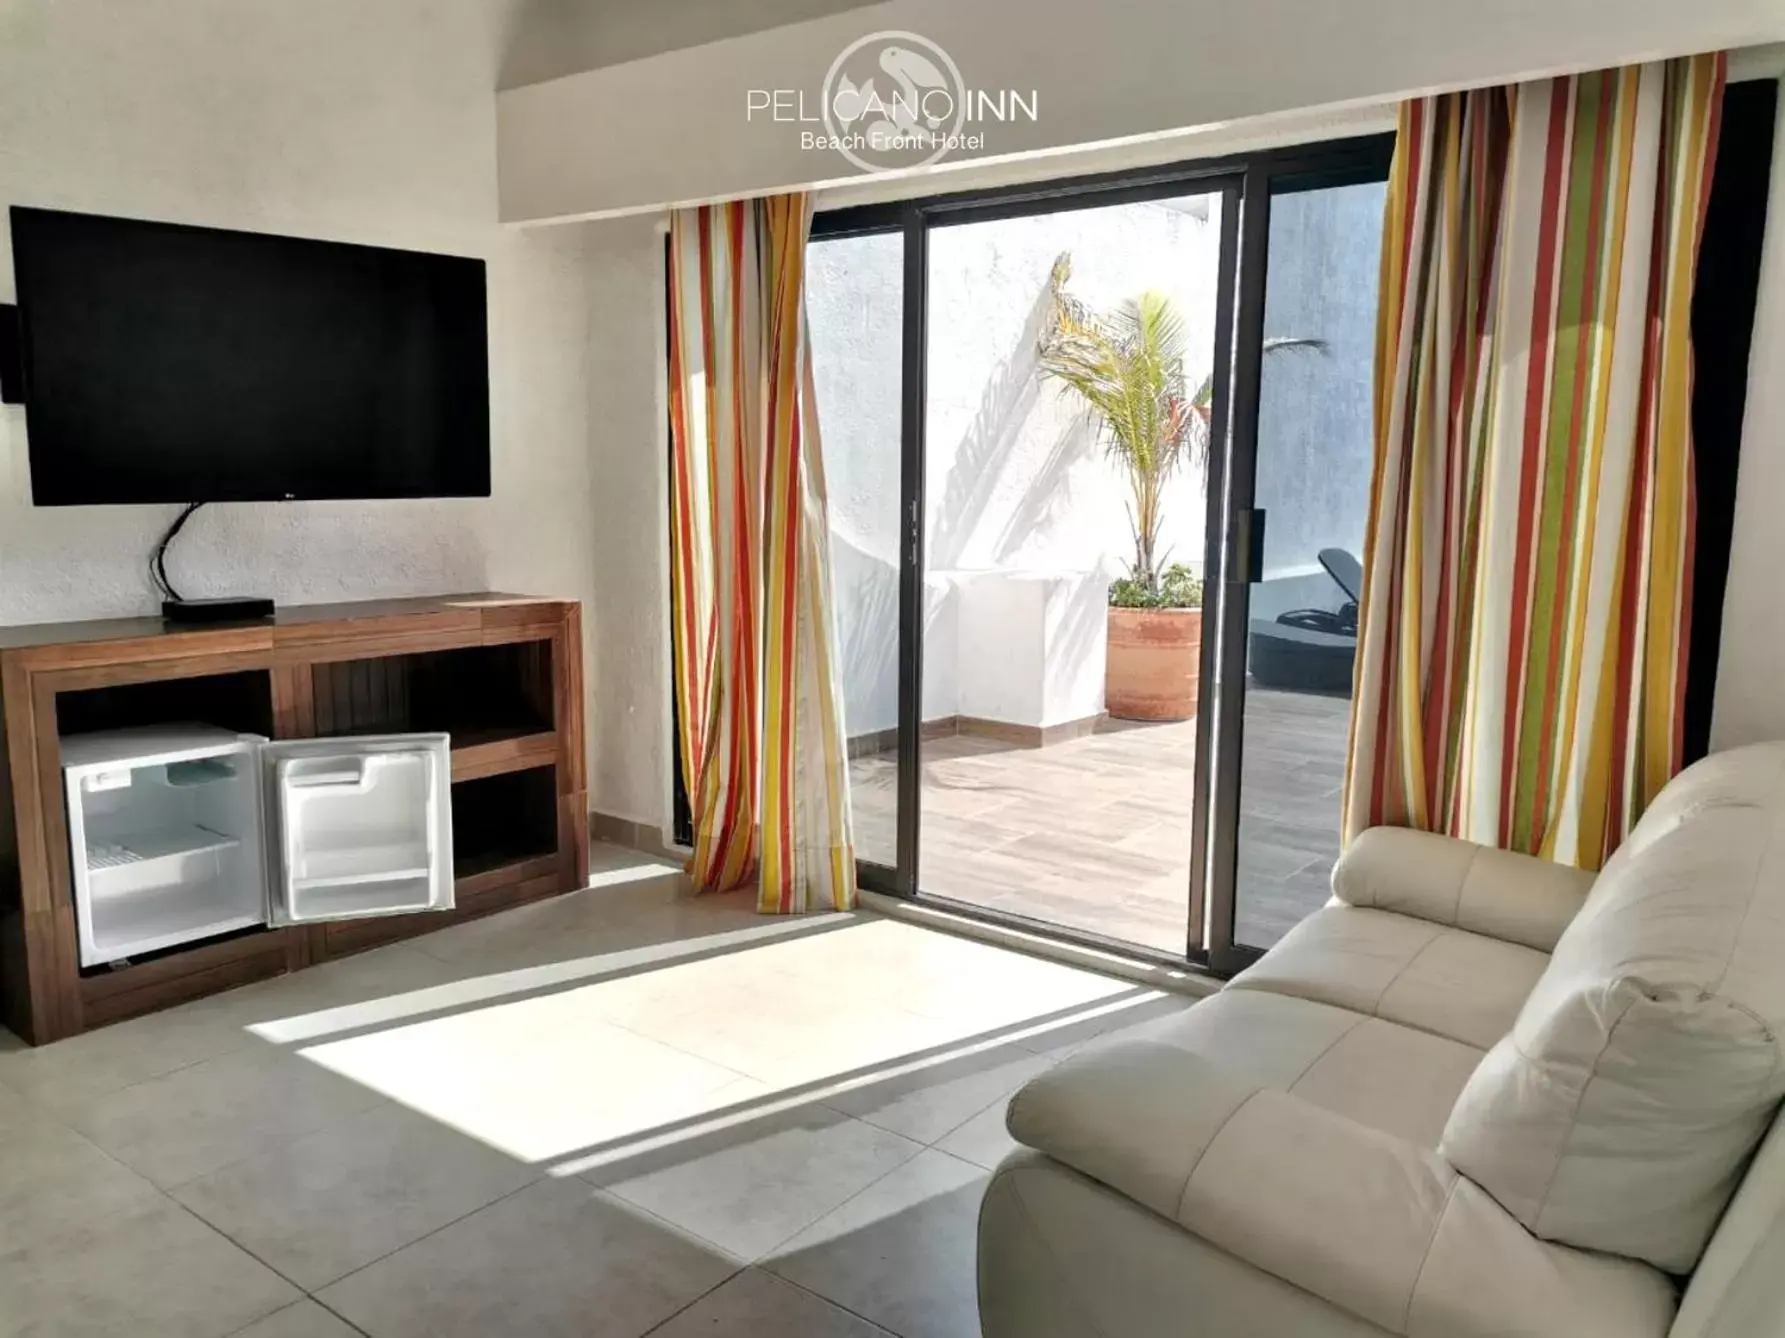 TV and multimedia, Seating Area in Pelicano Inn Playa del Carmen - Beachfront Hotel